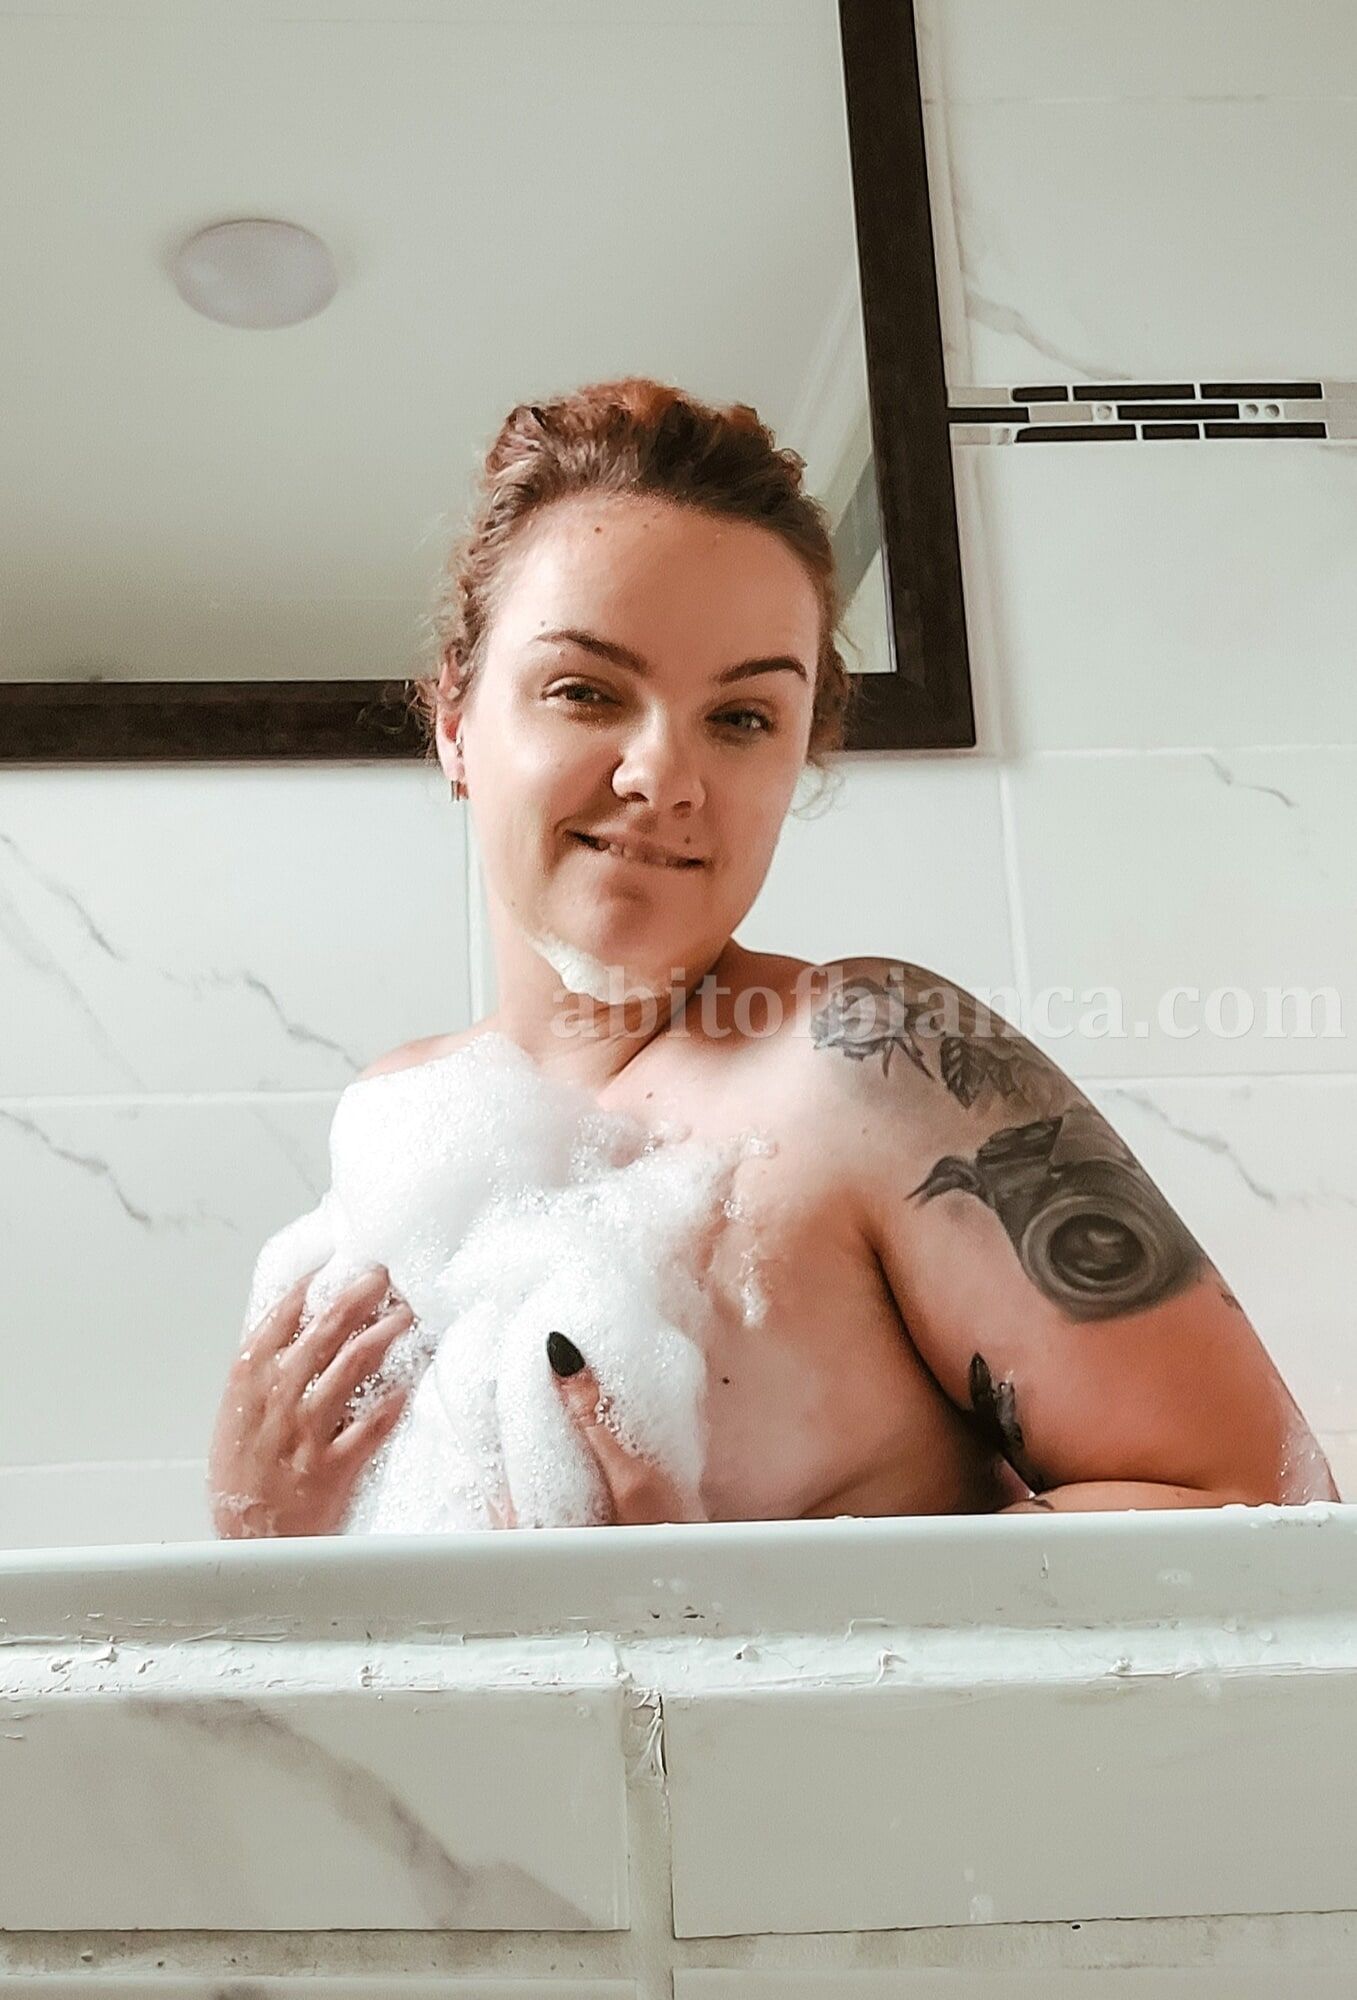 ABitofBianca hot tattooed redhead playing in a bubble bath #3